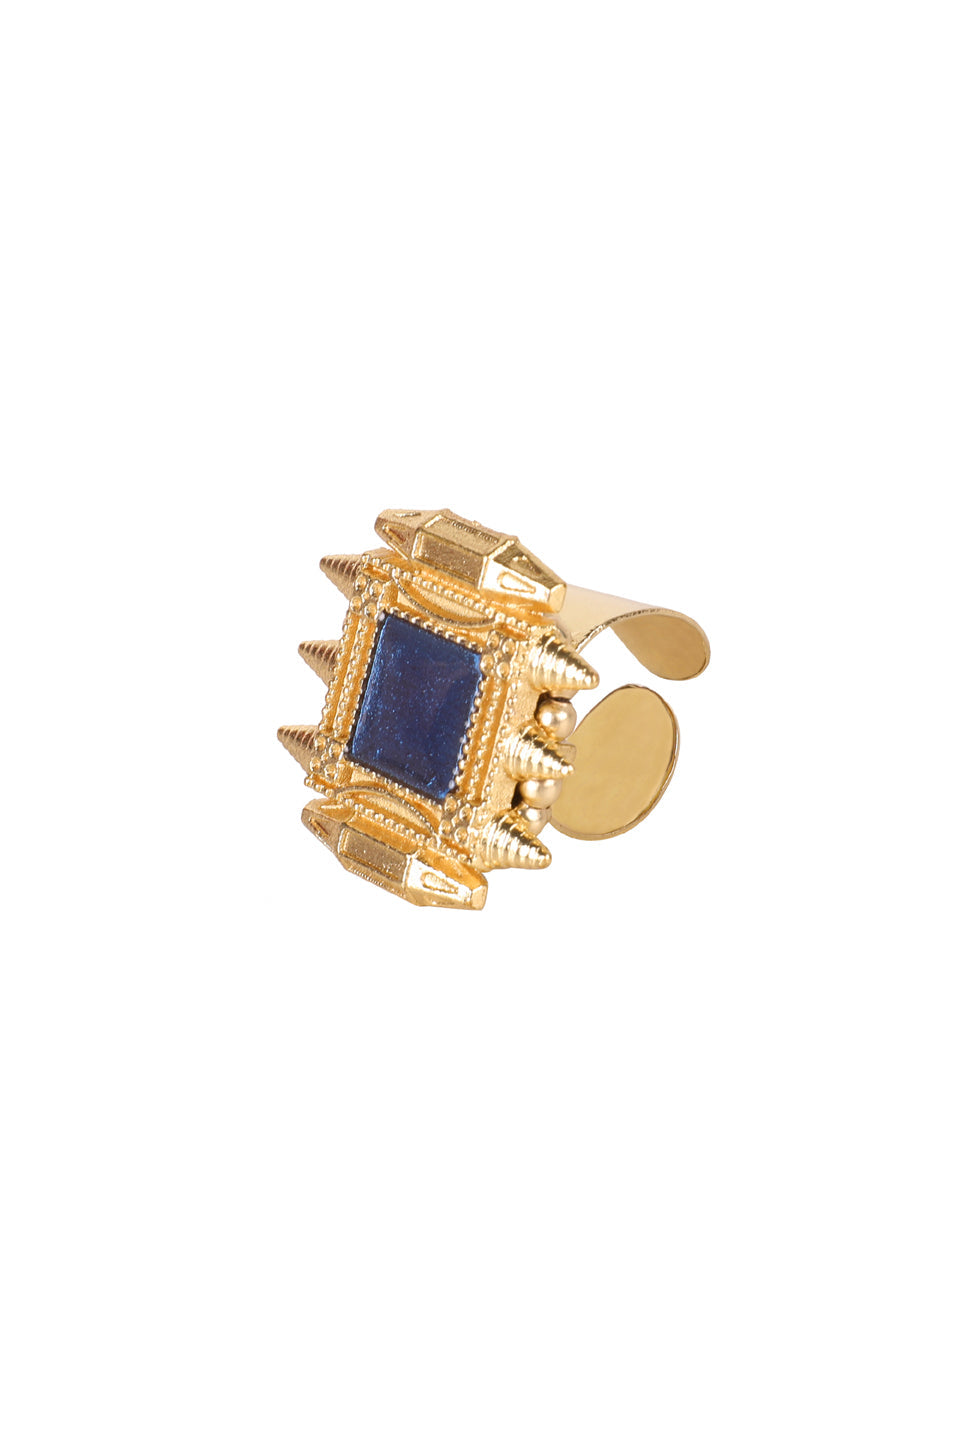 Glass Royal Blue Marayam Enamel Ring